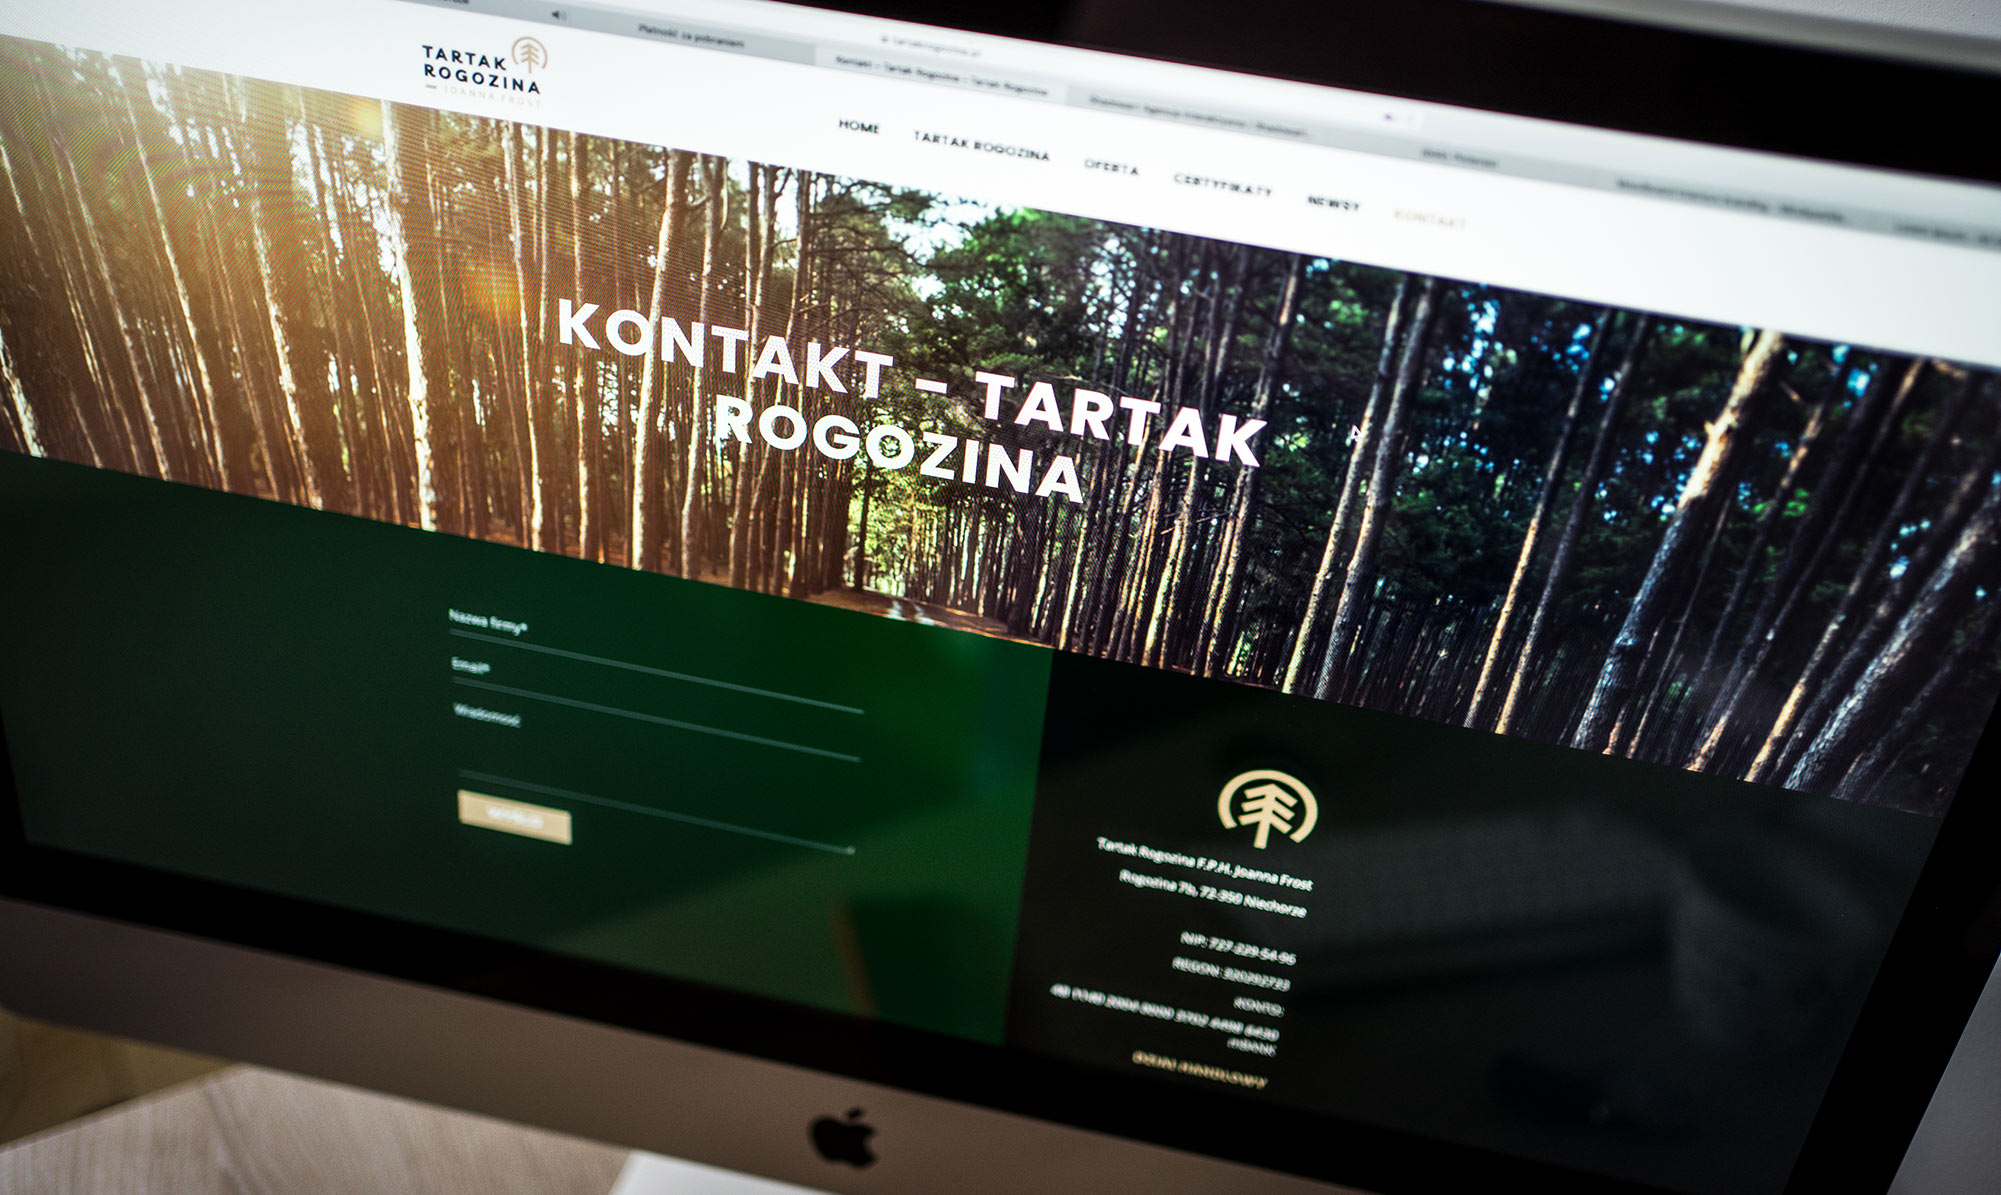 Strona internetowa Tartak Rogozina